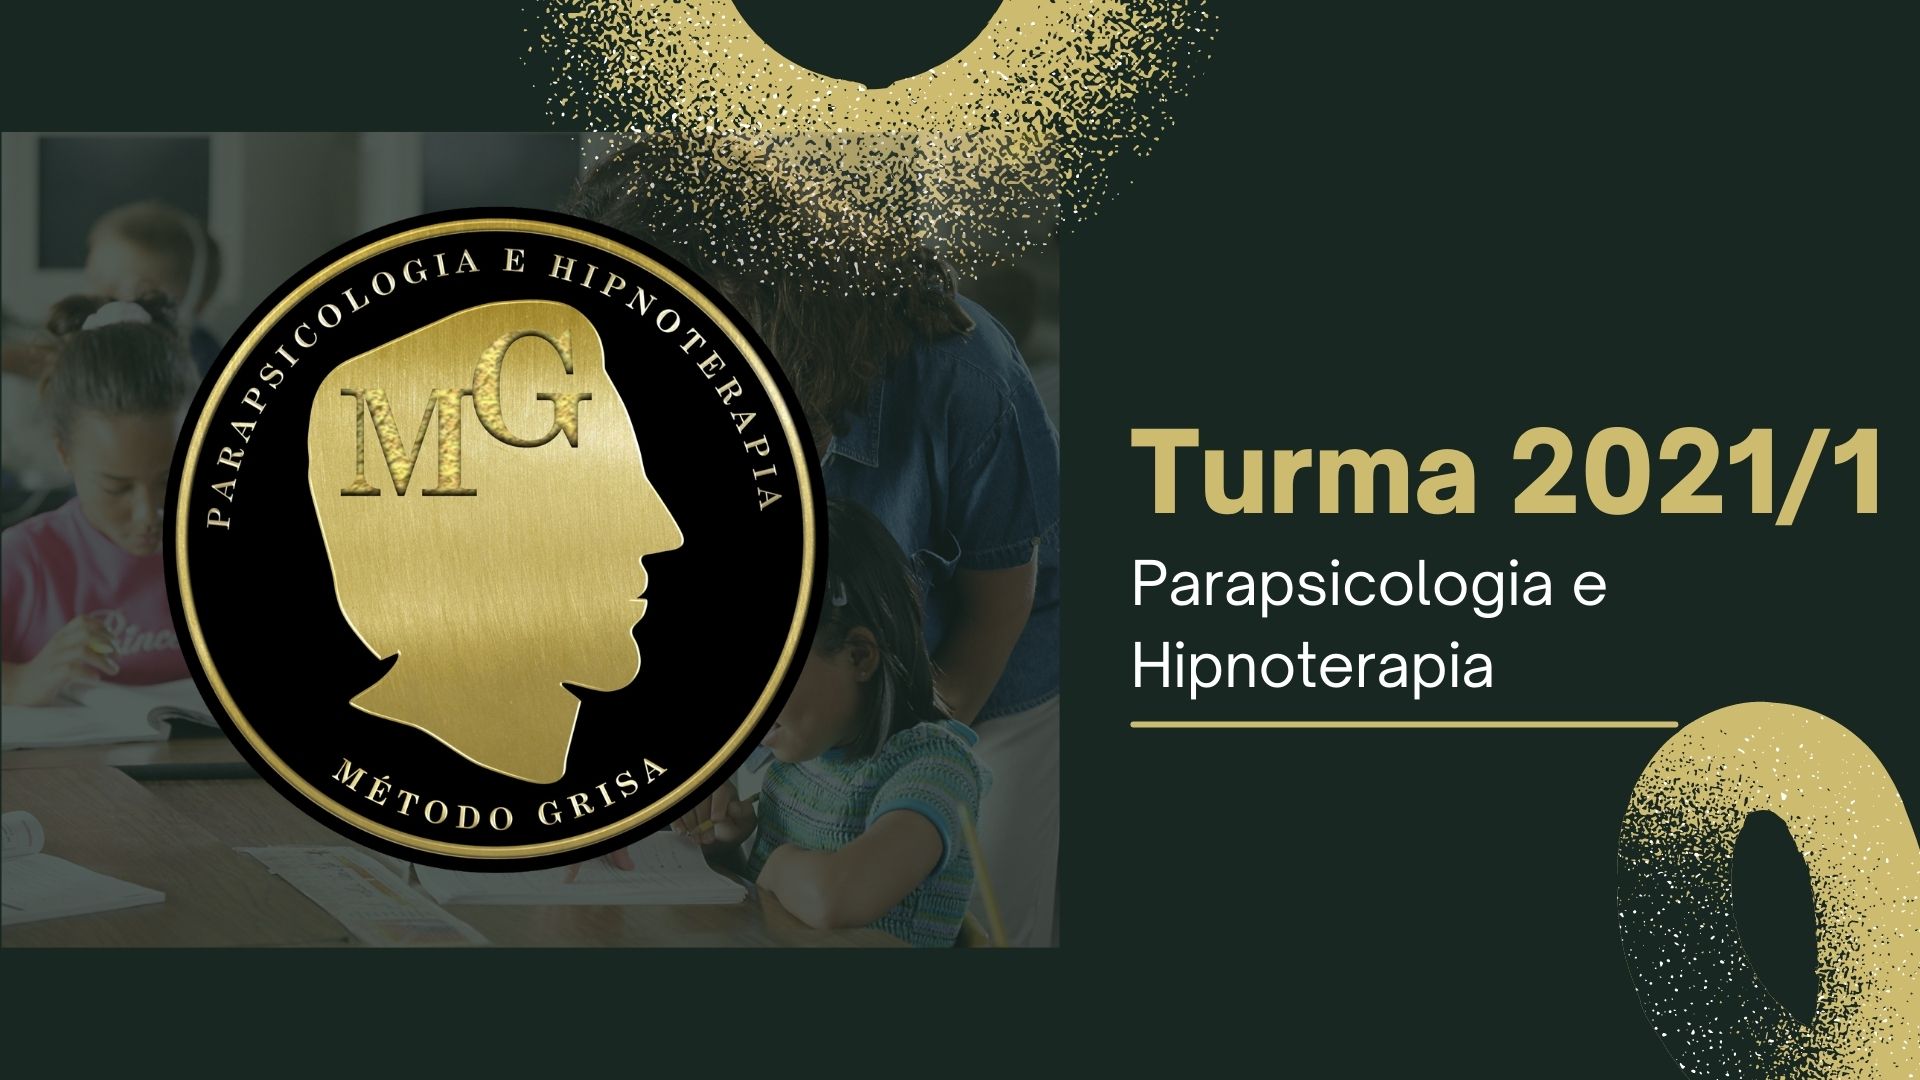 Parapsicologia e Hipnoterapia Turma 2021/1